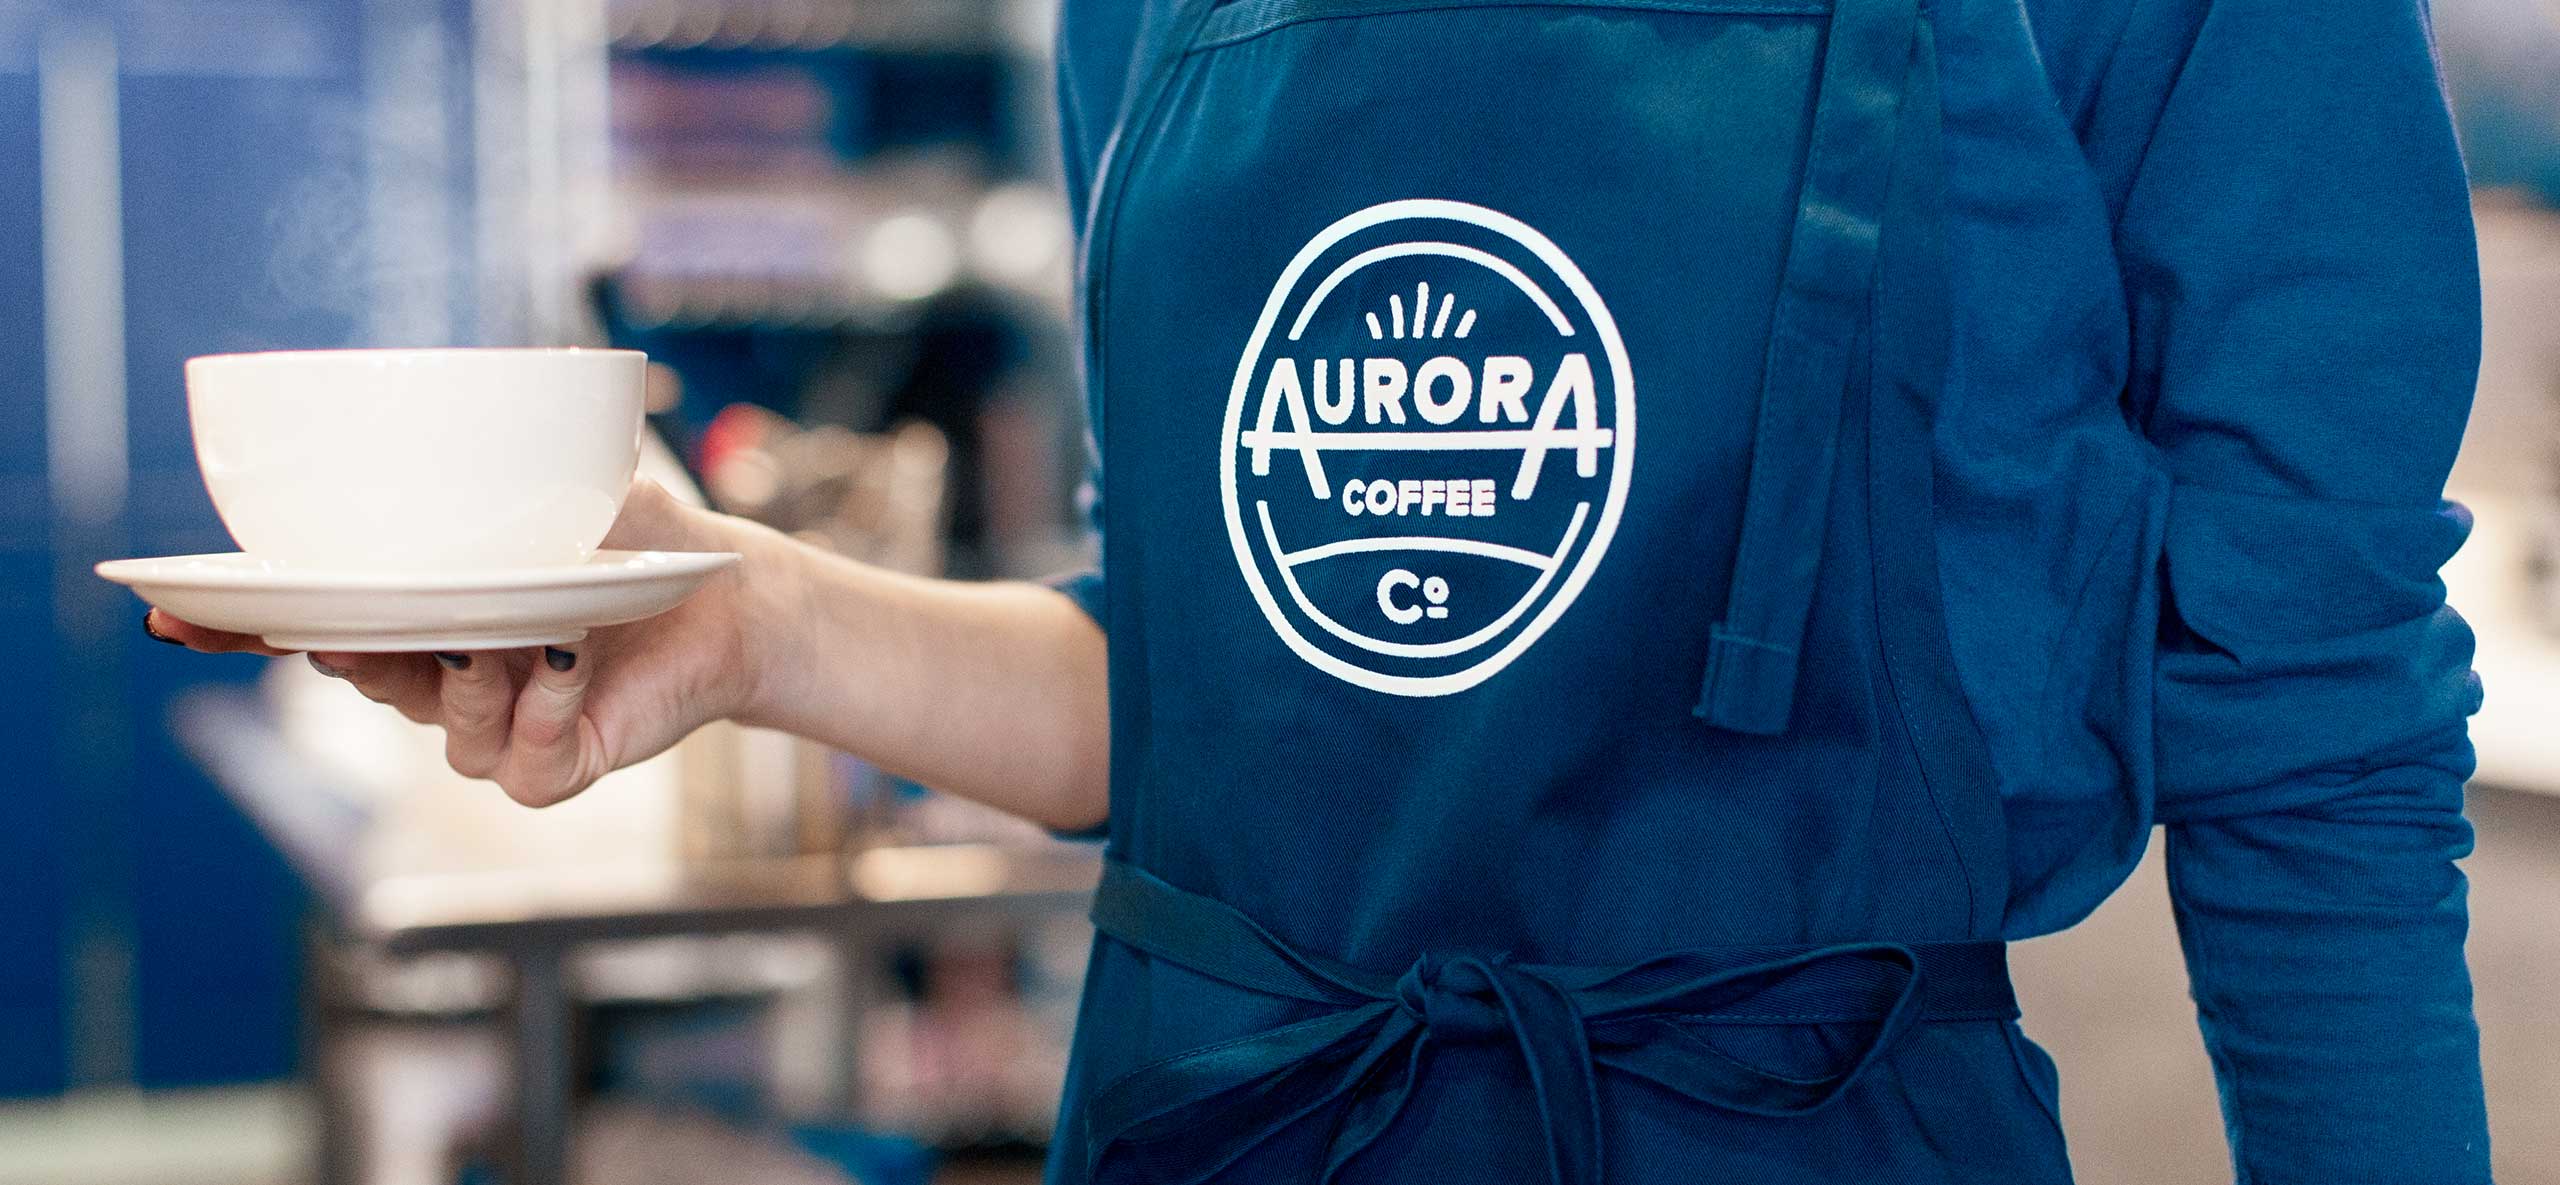 Aurora Barista holding coffee mug in apron